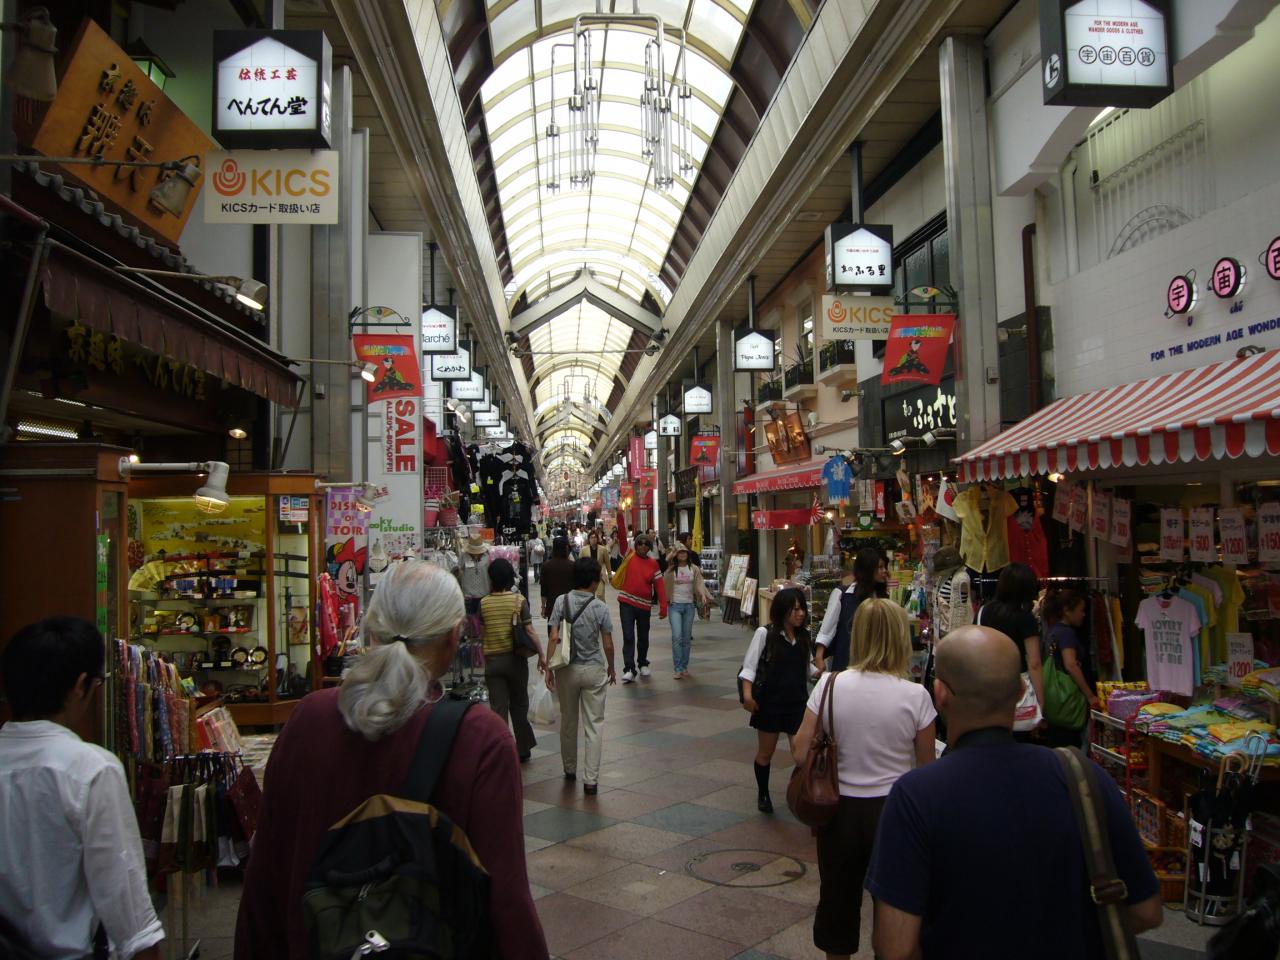 JPEG image - Kyoto: a typical shopping arcade. ...